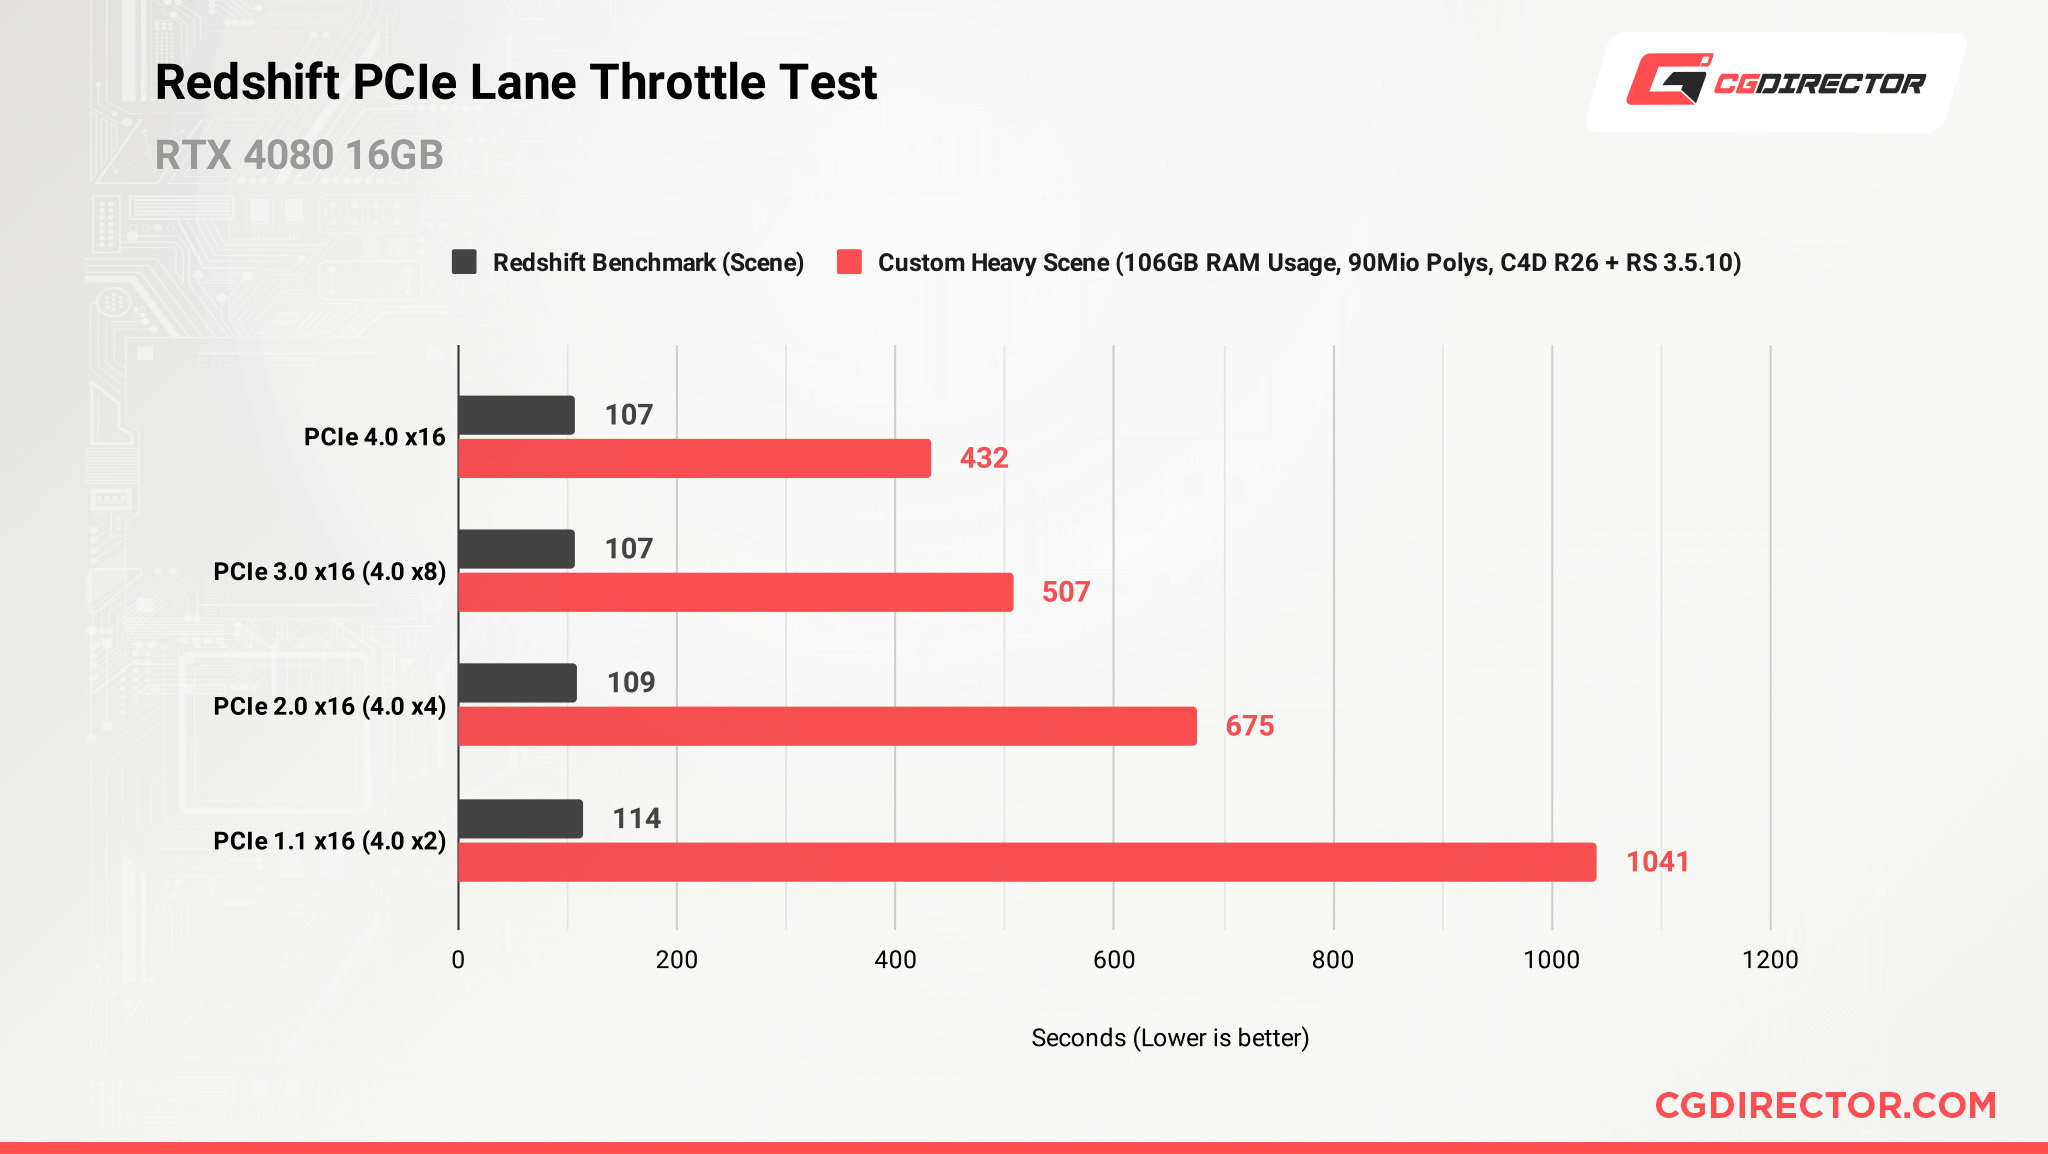 RTX 4080 PCIe Lanes Throttle Test